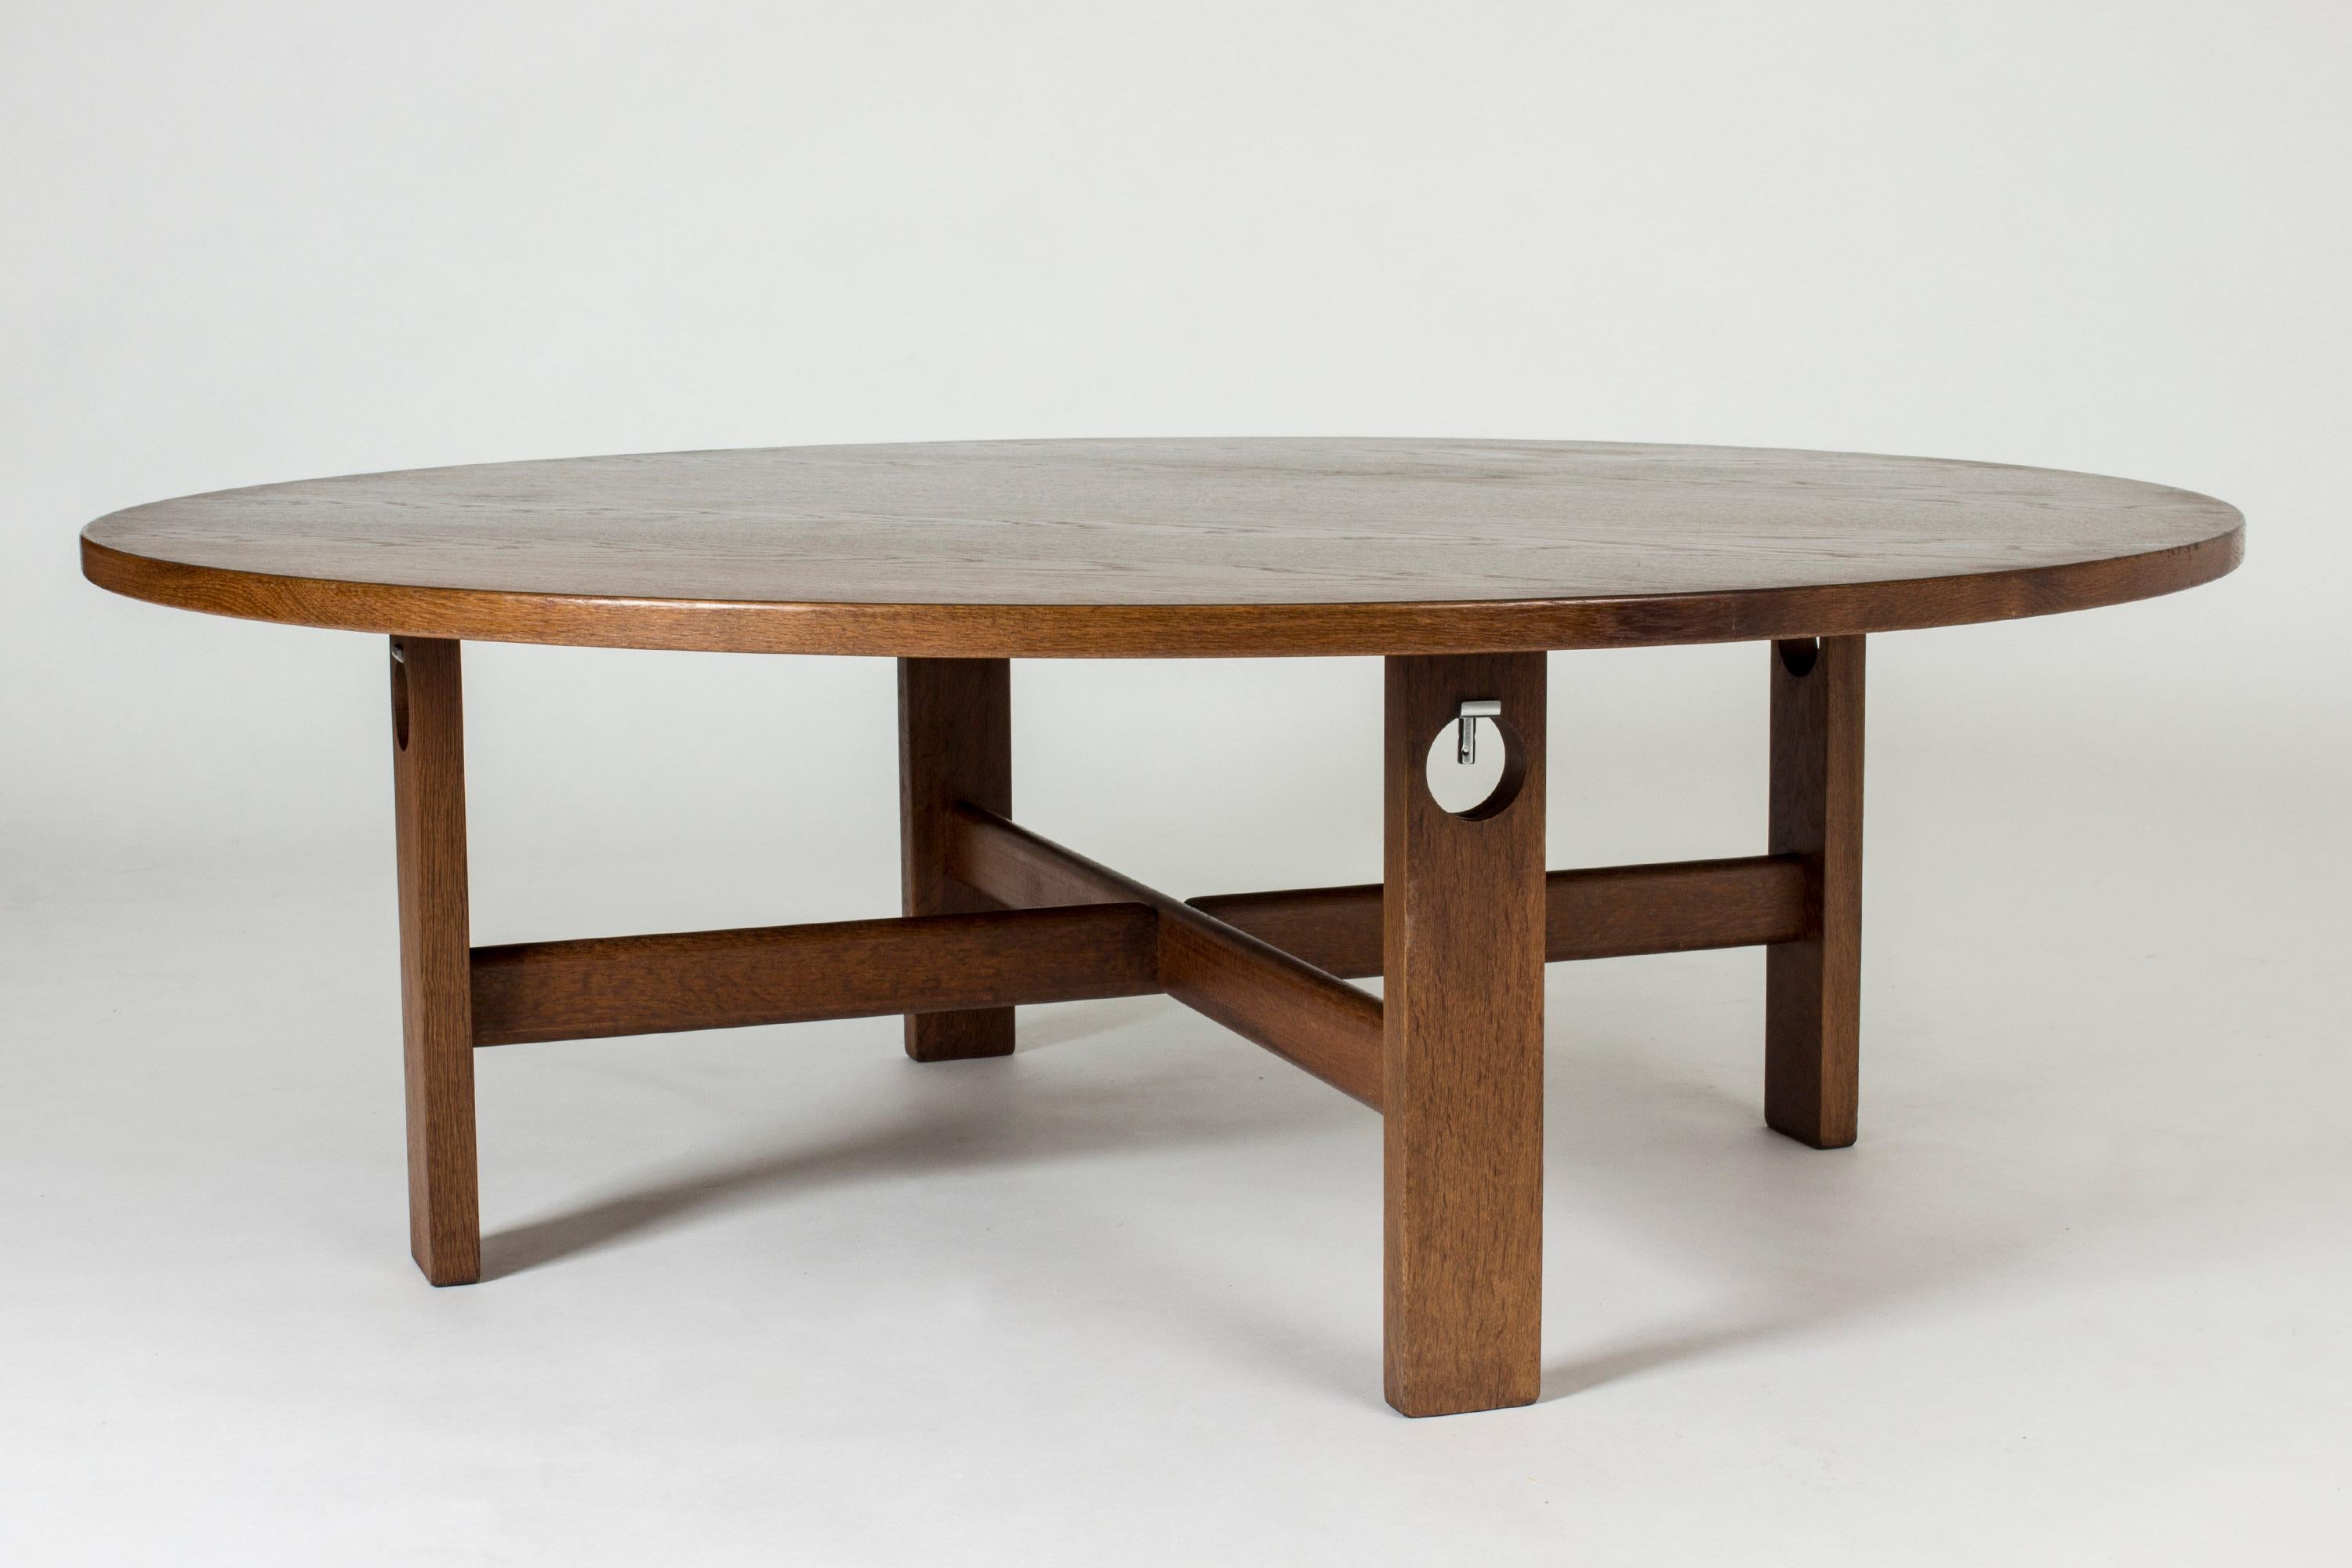 Scandinavian Modern Stained Oak Coffee Table Designed by Hans J. Wegner for GETAMA, Denmark, 1960s